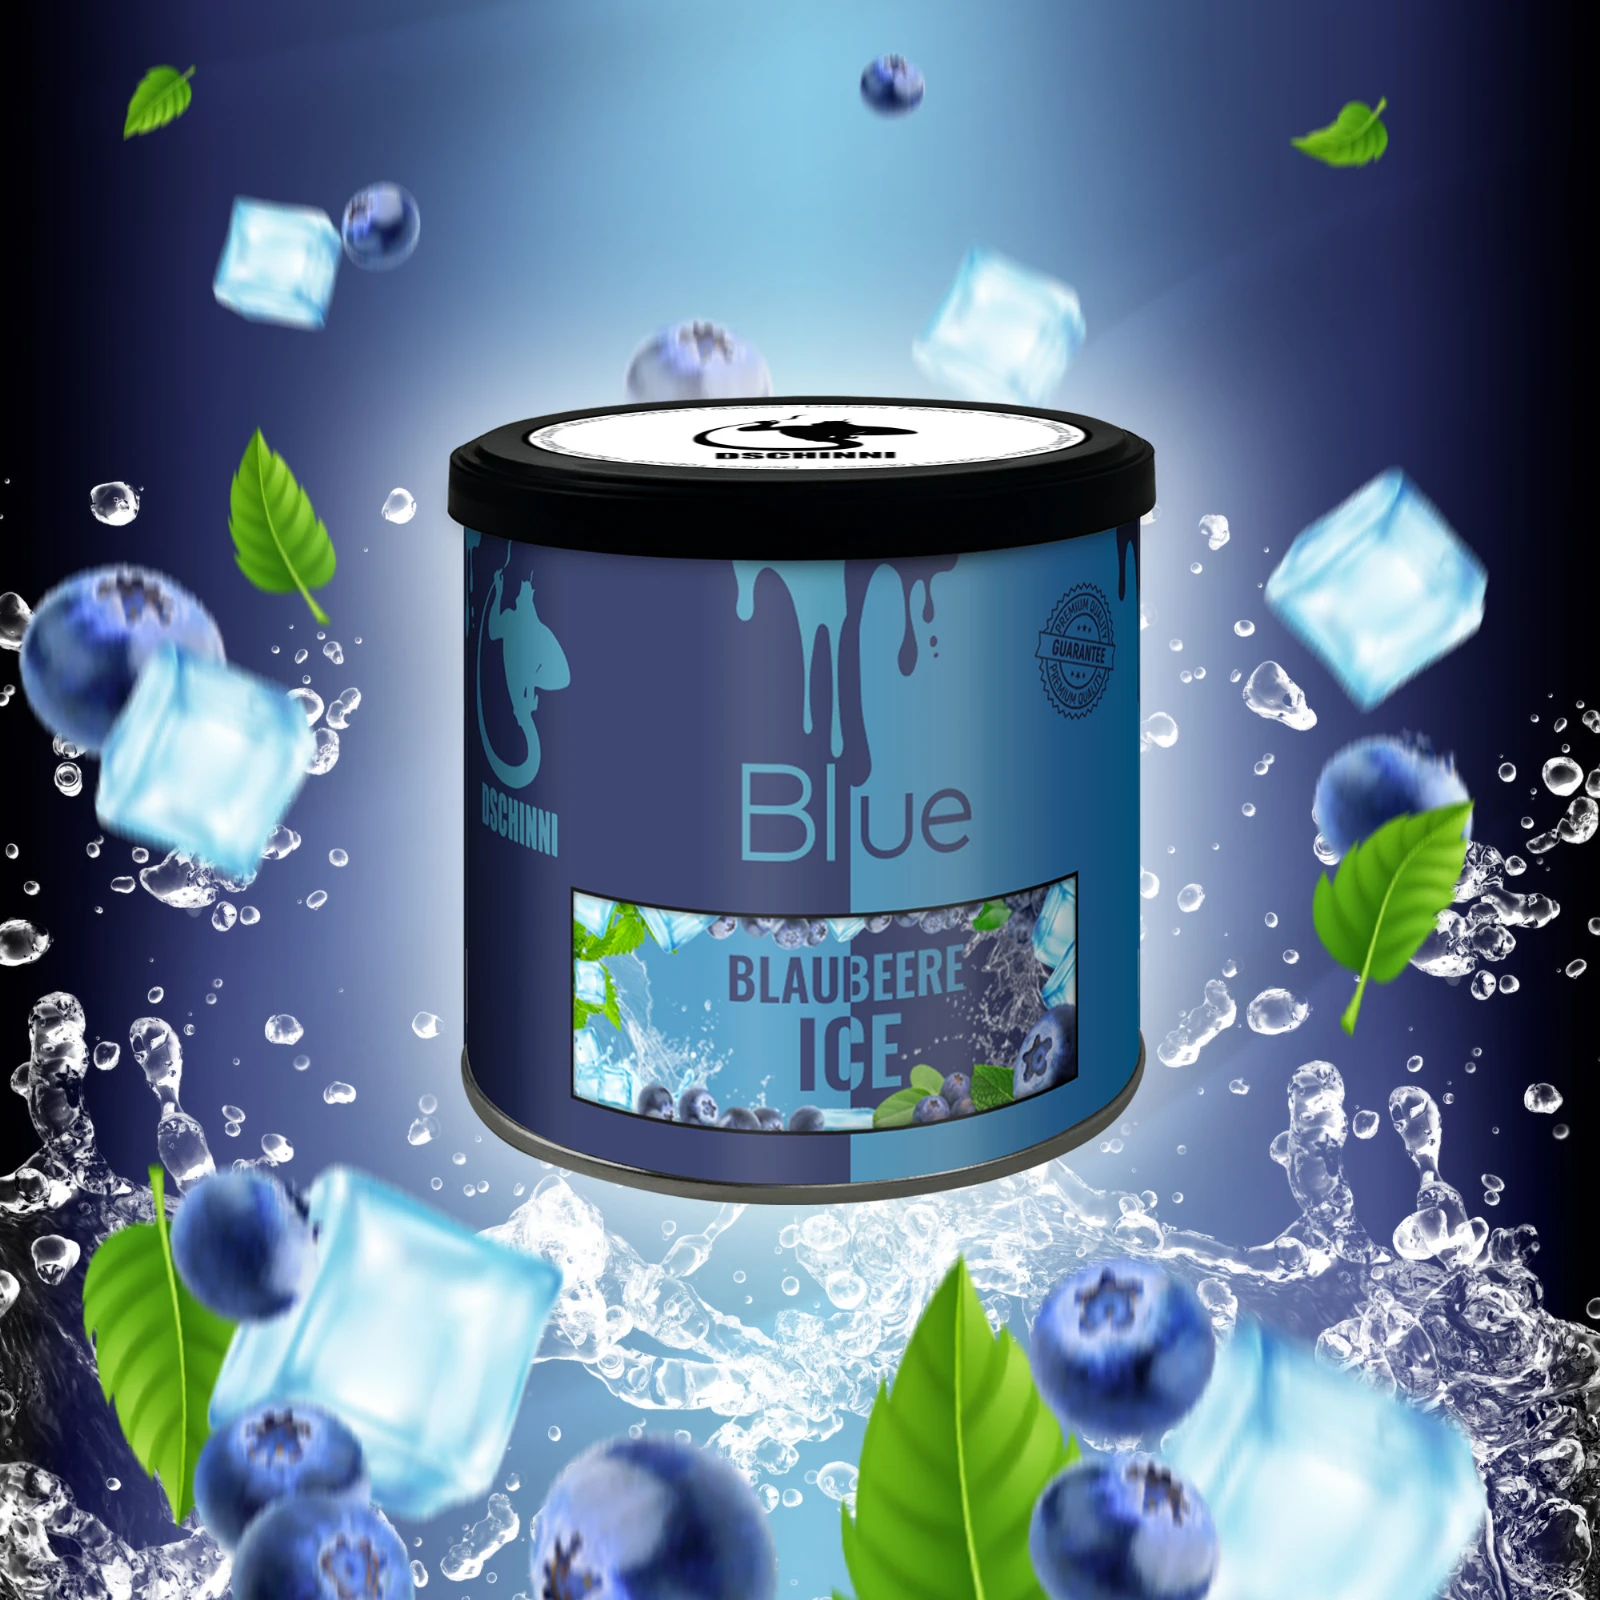 Dschinni - Pfeifentabak - Blue 2.0 - 65g | Shishas günstig kaufen1